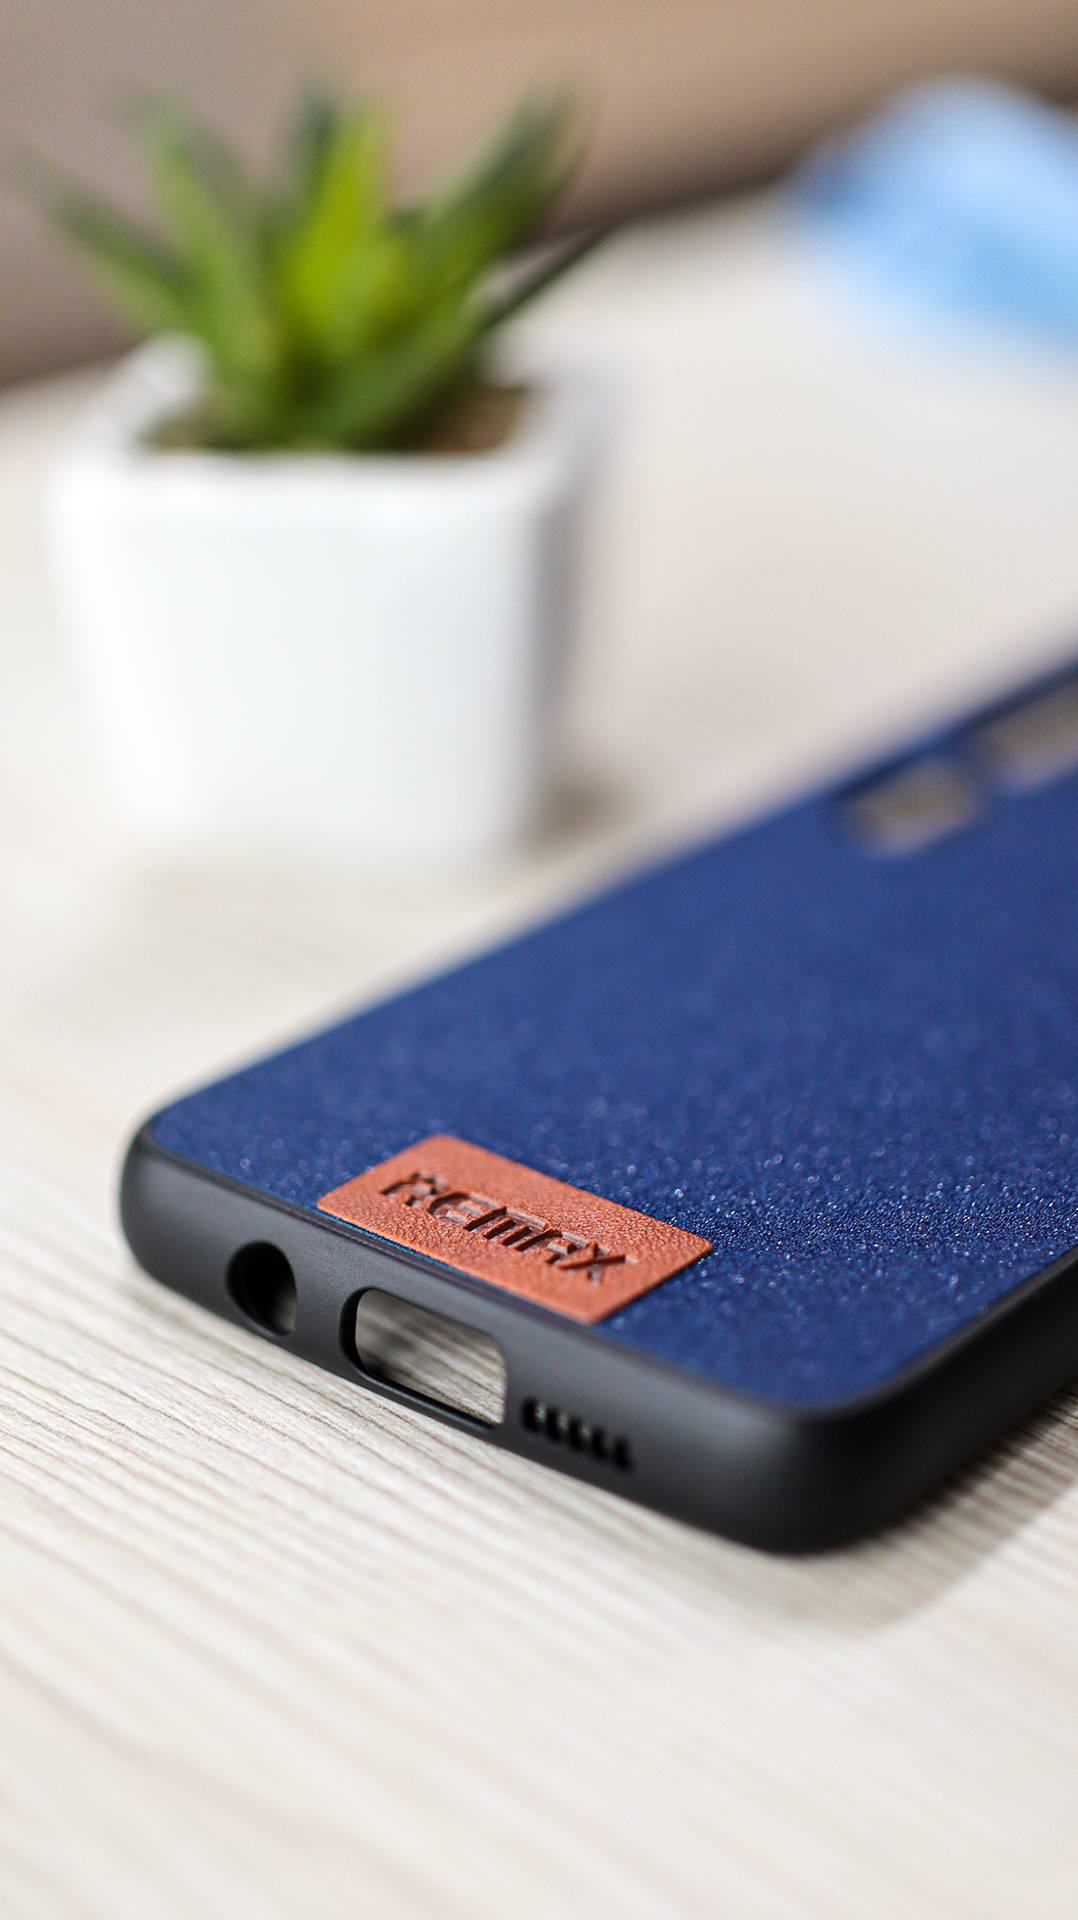 Силикон REMAX TISSUE для Xiaomi Redmi Note 8T темно-синий